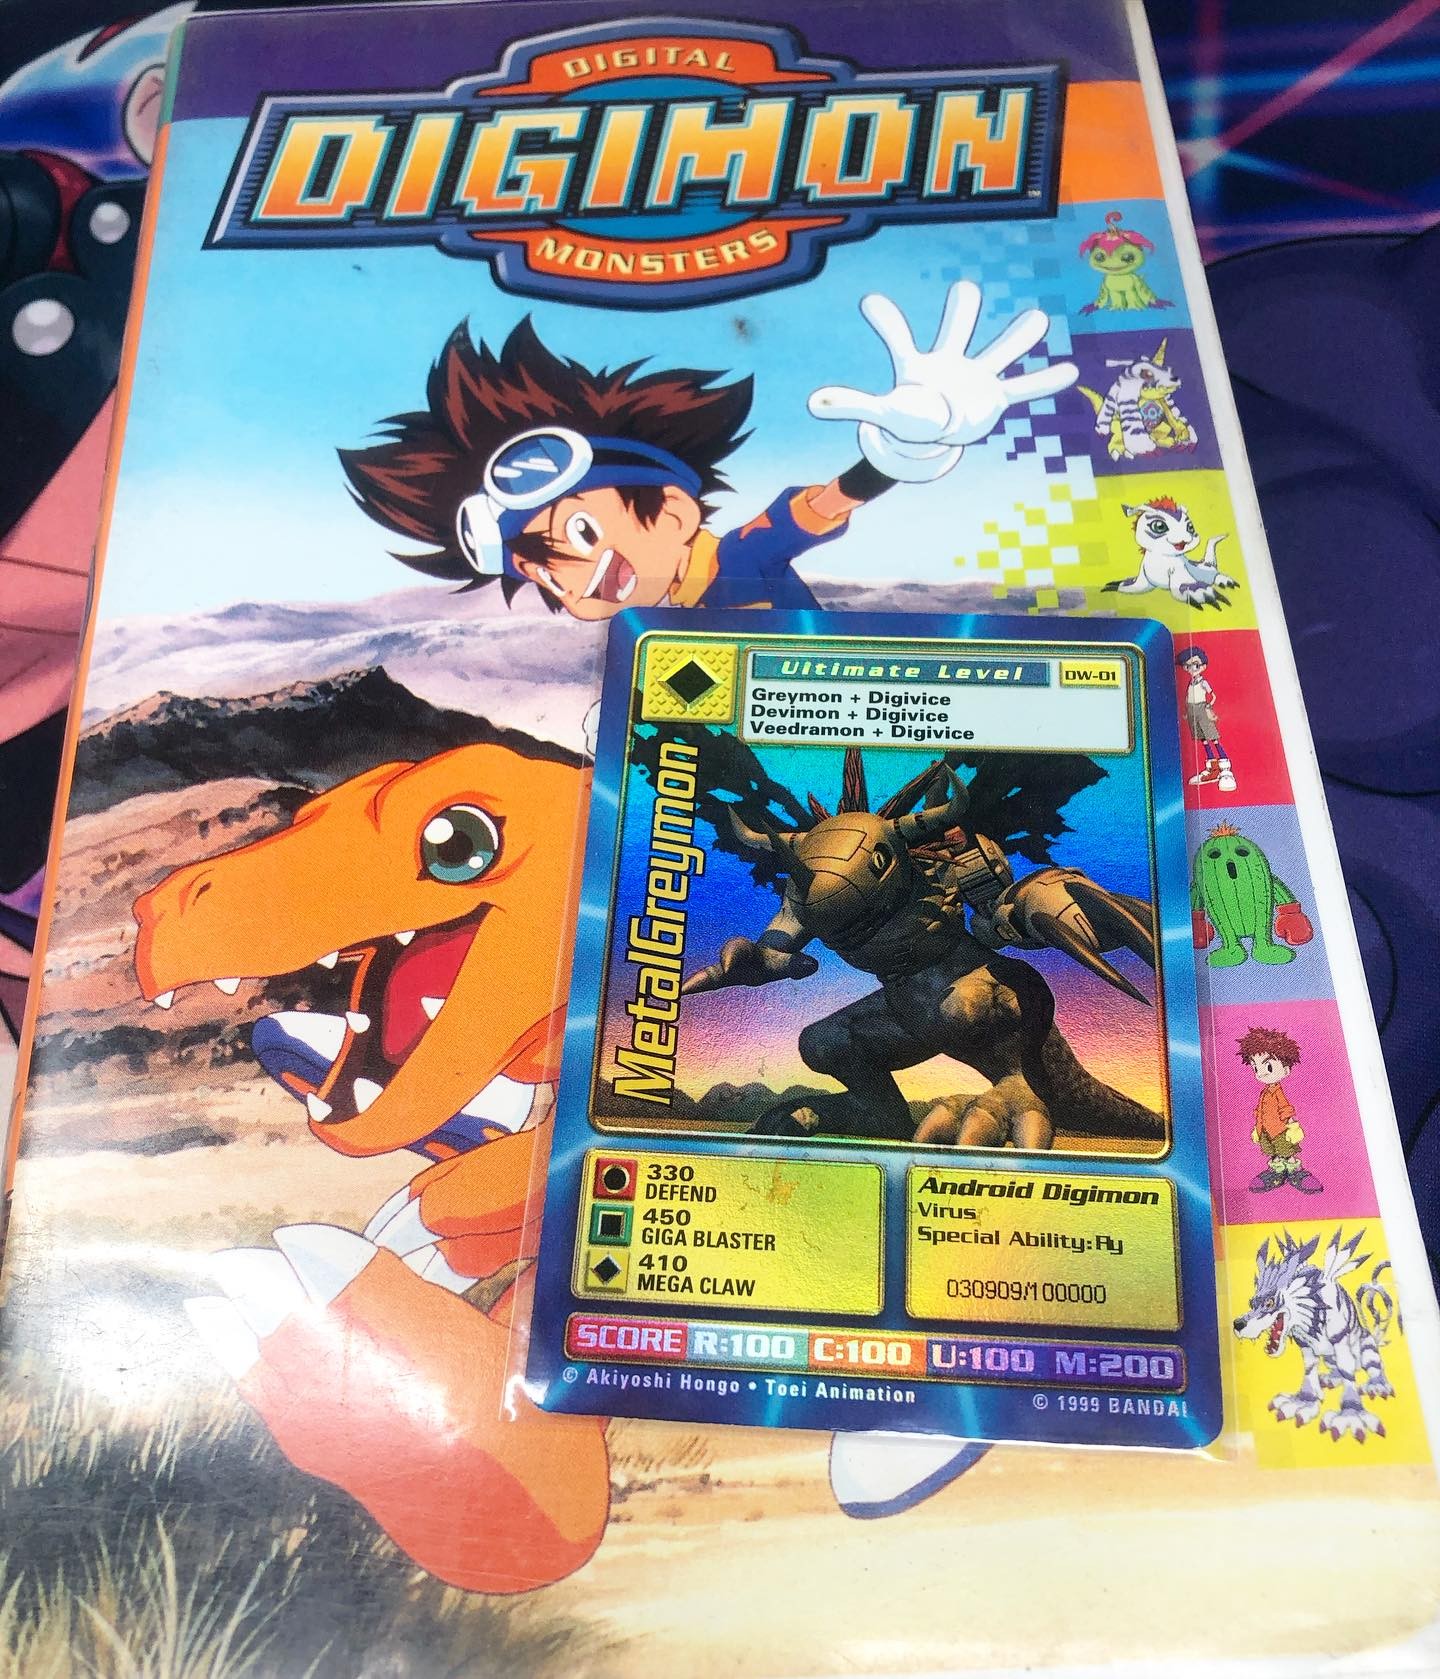 Digimon World PlayStation Promo DW-01 MetalGreymon - number 030909 / 100,000